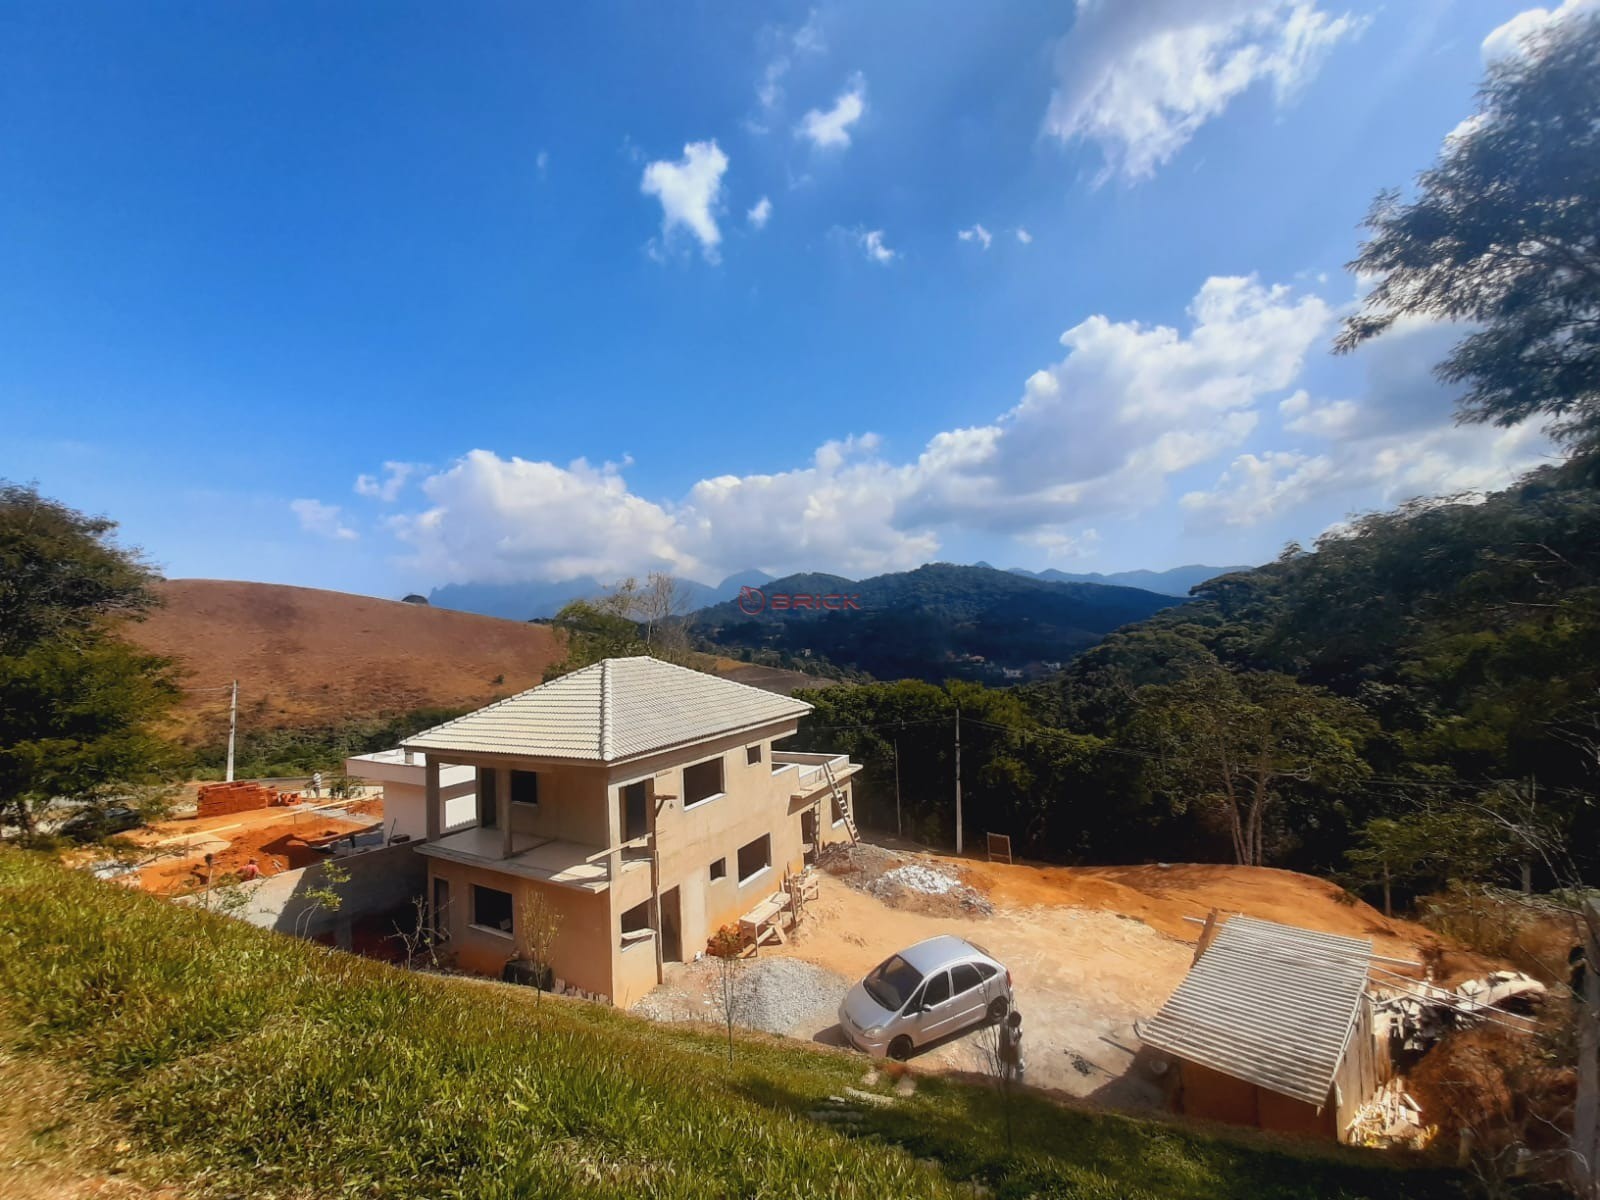 Terreno Residencial à venda em Prata, Teresópolis - RJ - Foto 11